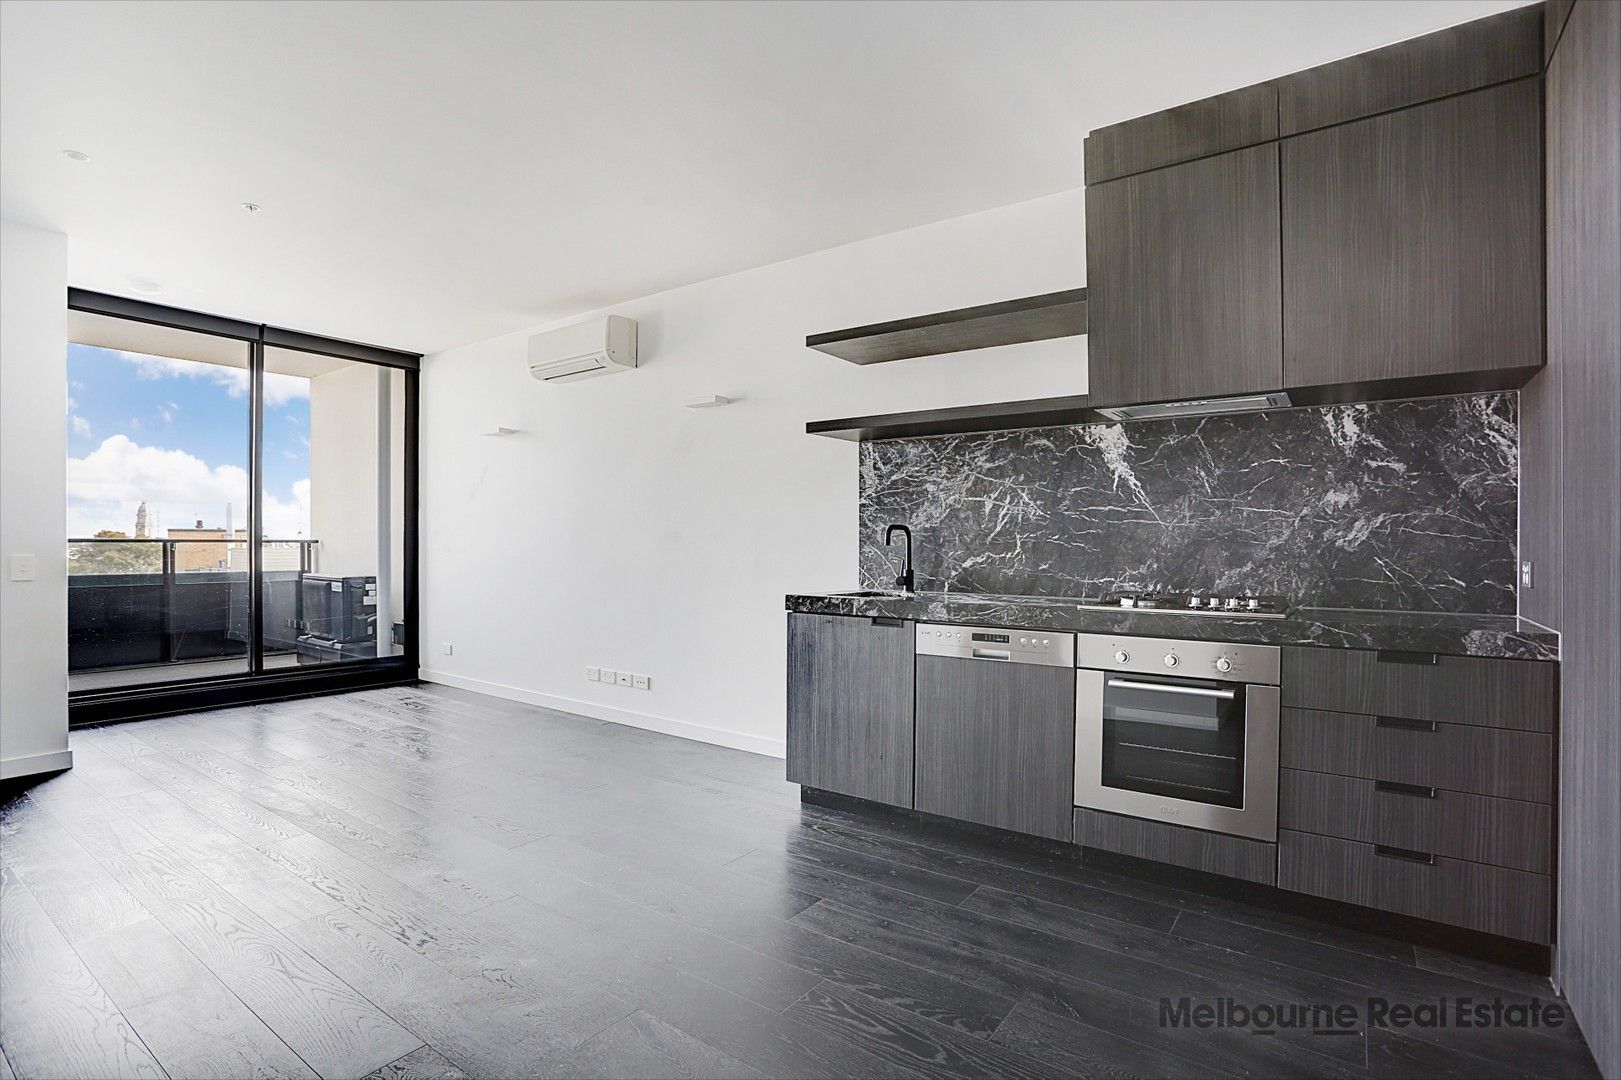 2 bedrooms Apartment / Unit / Flat in 535/23 Blackwood Street NORTH MELBOURNE VIC, 3051